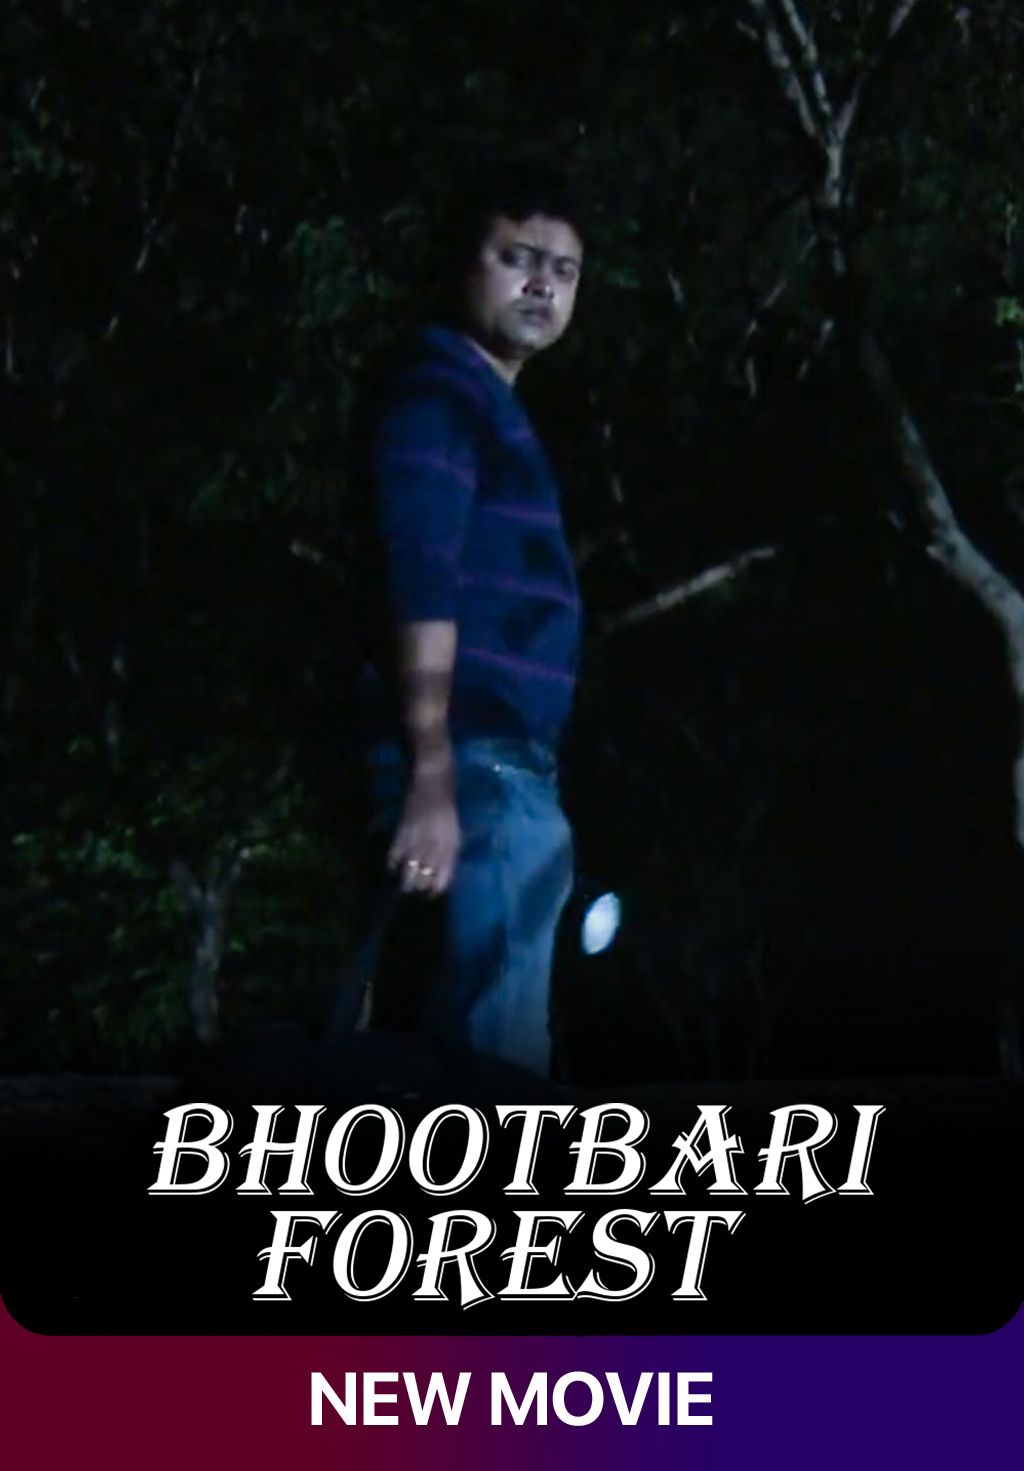 Bhootbari Forest